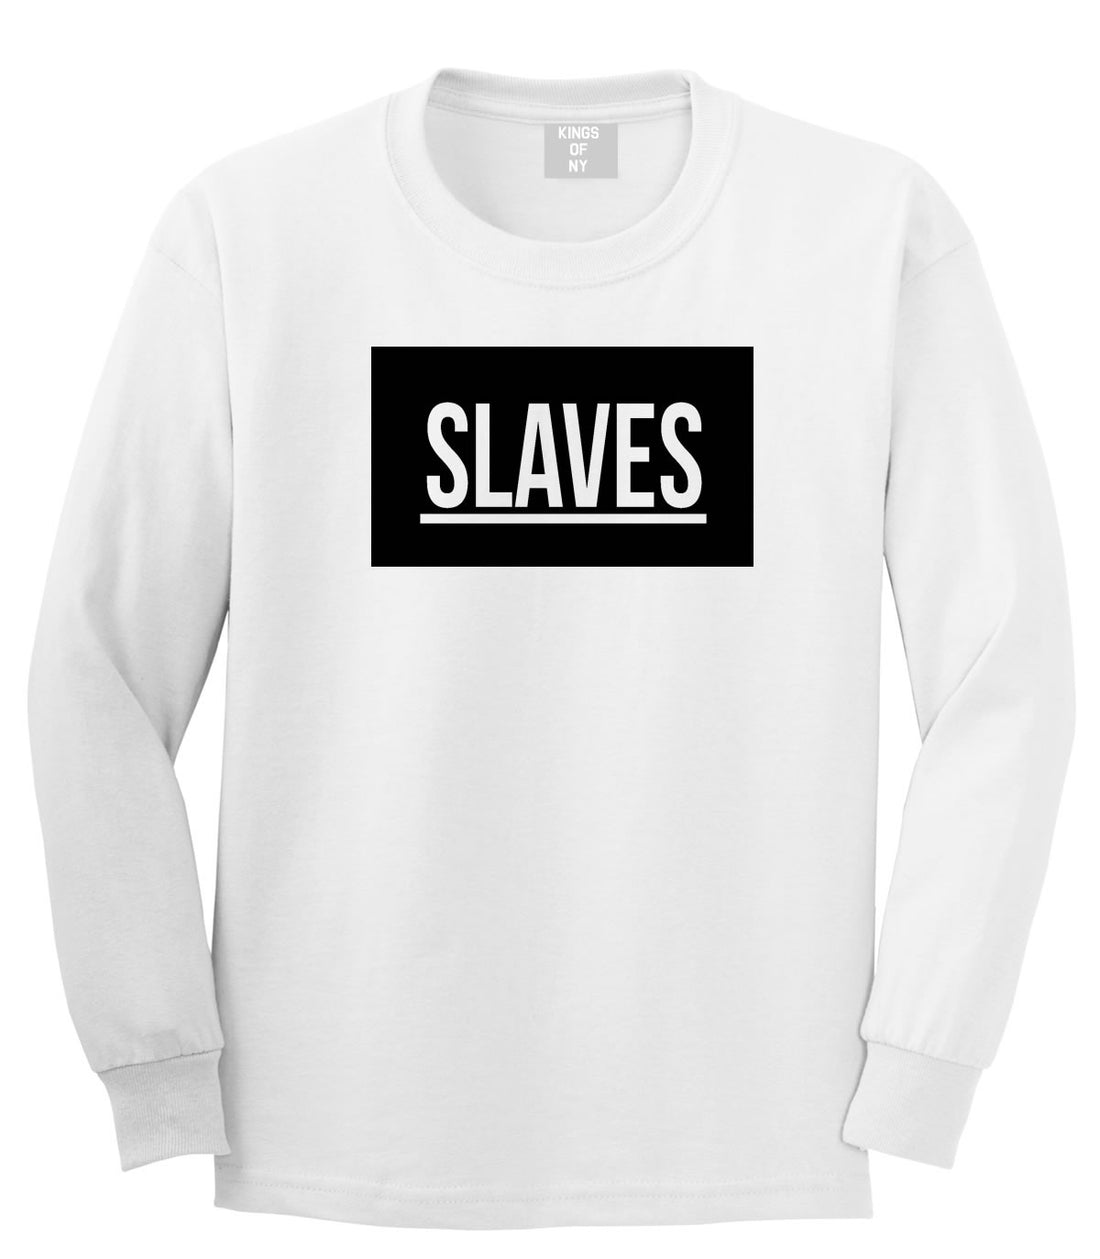 Slaves Fashion Kanye Lyrics Music West East Long Sleeve Boys Kids T-Shirt in White by Kings Of NY